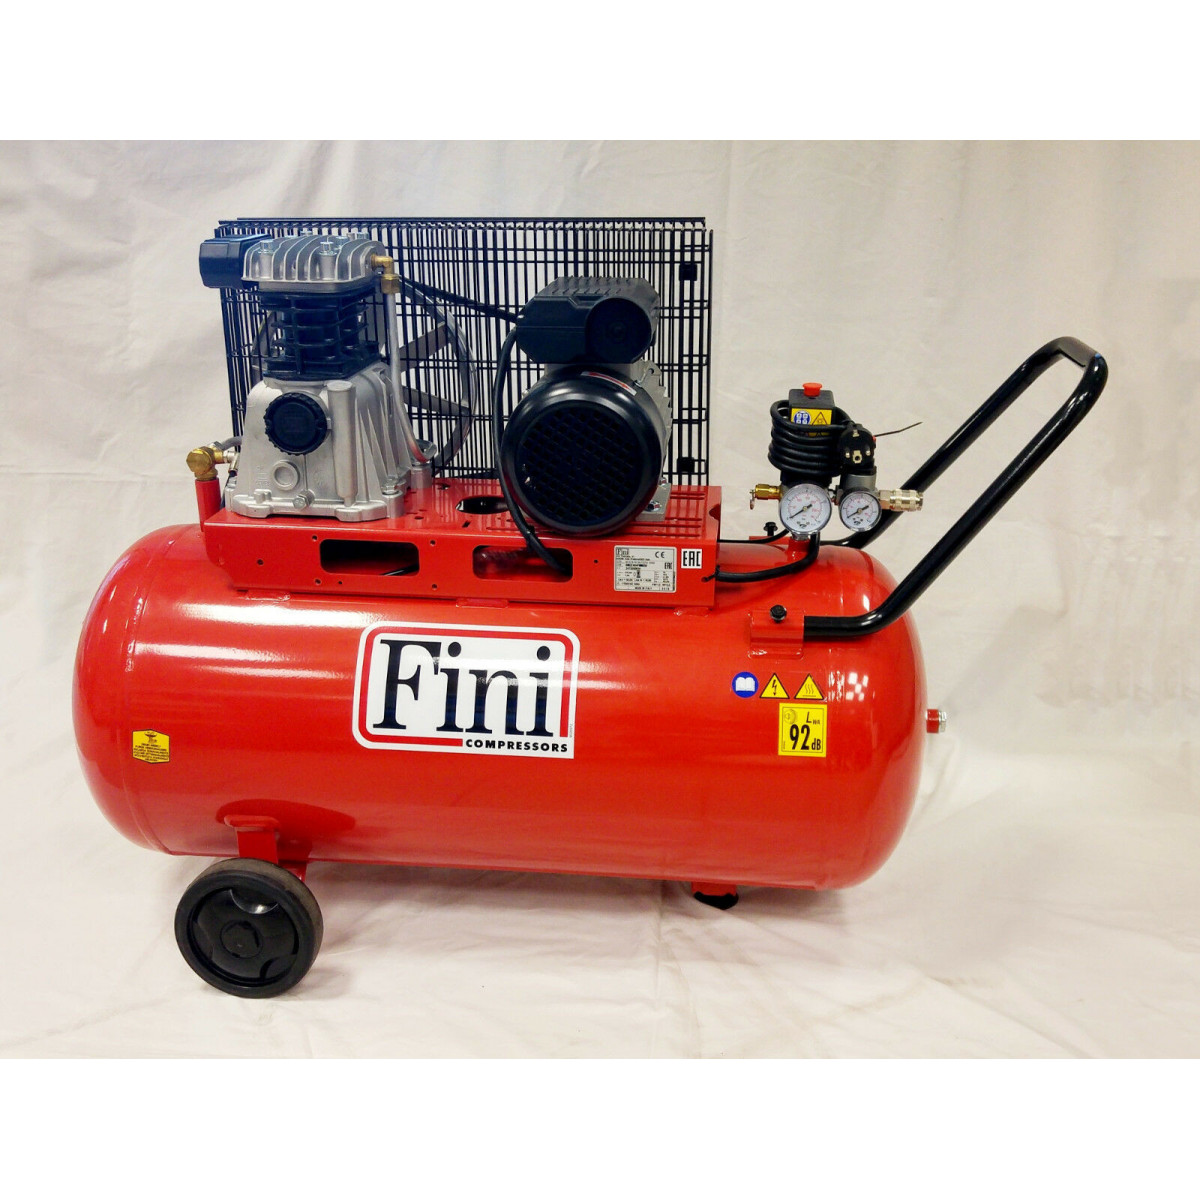 FINI - Compressore d'aria a cinghia monofase MK 102/N-90-2M 2HP